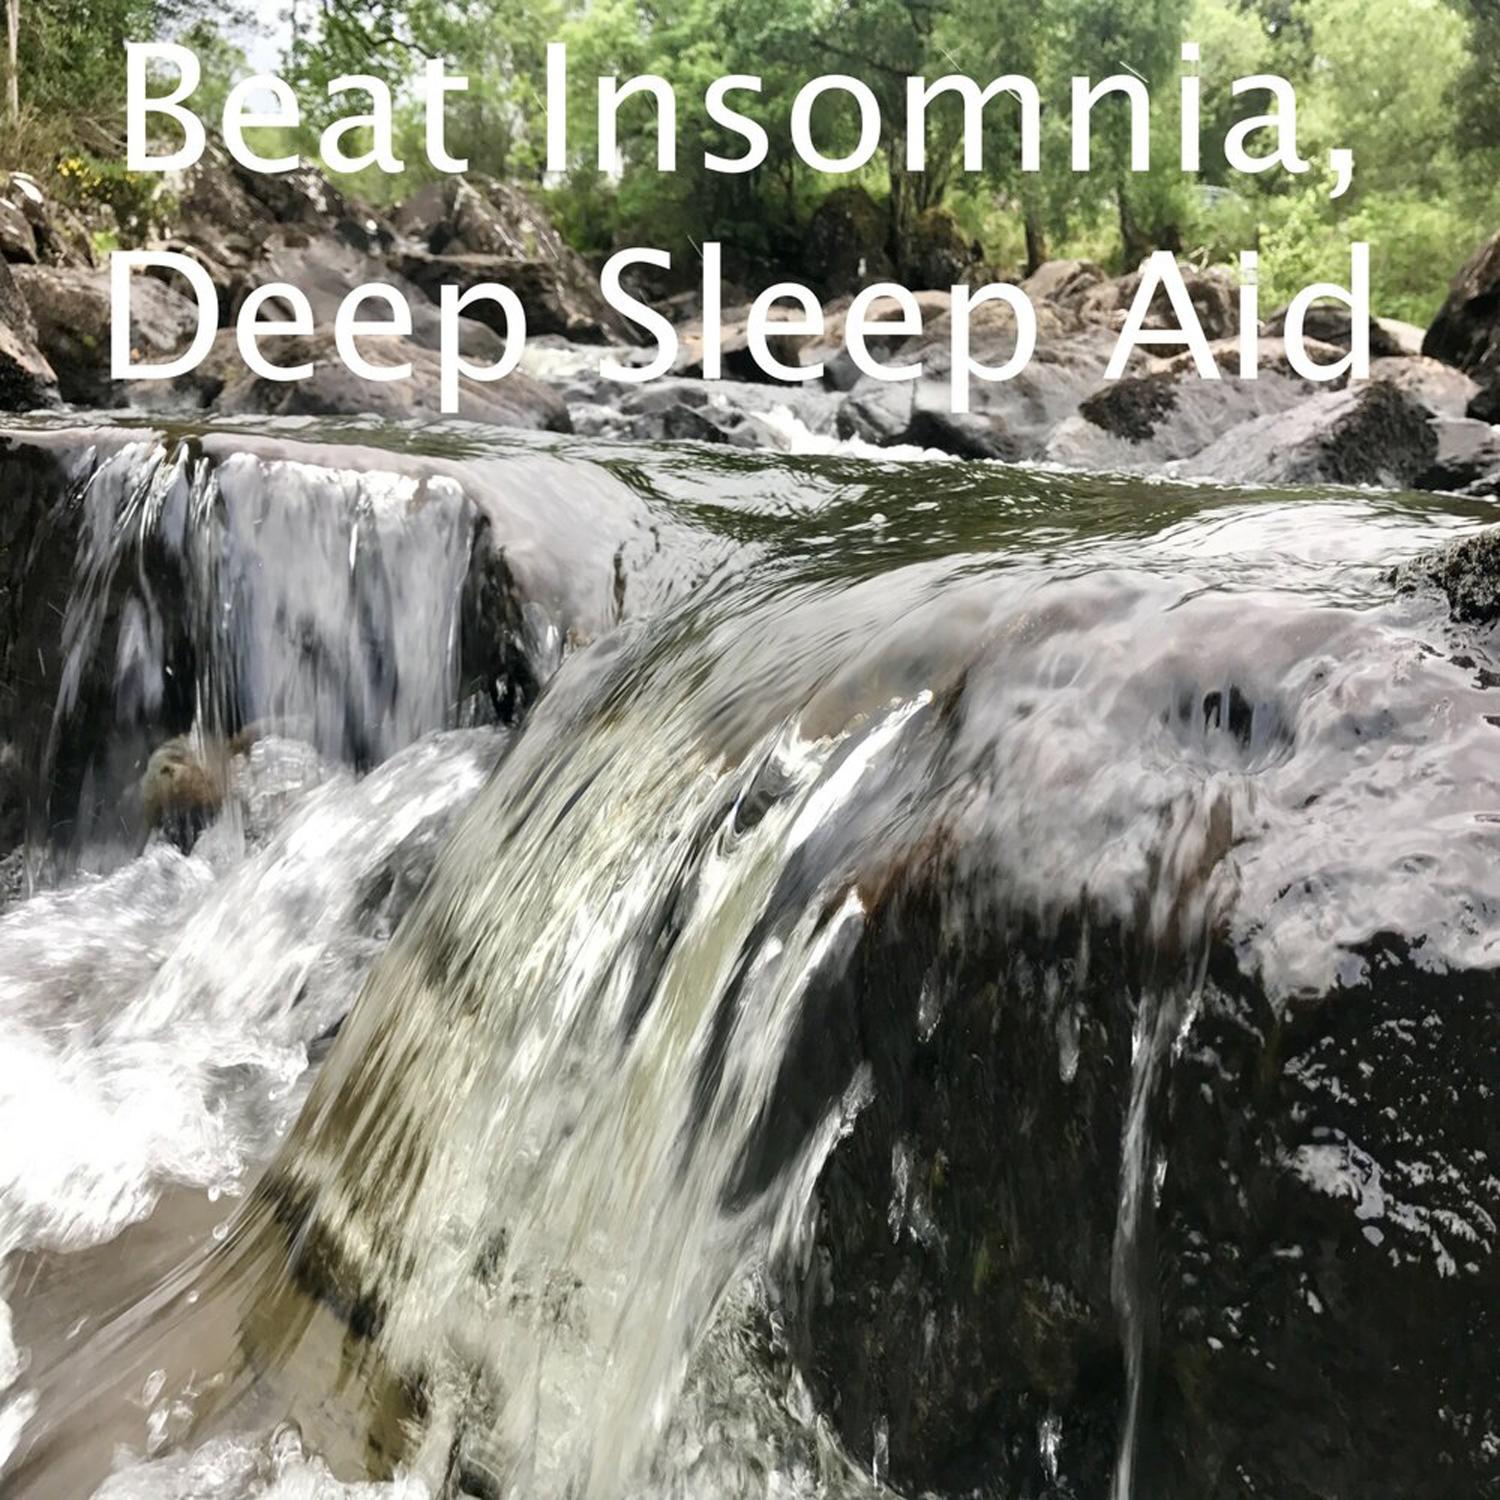 19 Tracks for Sleep: Insomnia Aid, Tinnitus Aid, Baby Colic, Autism, Sleep, Rain Sounds, Sleep Rain